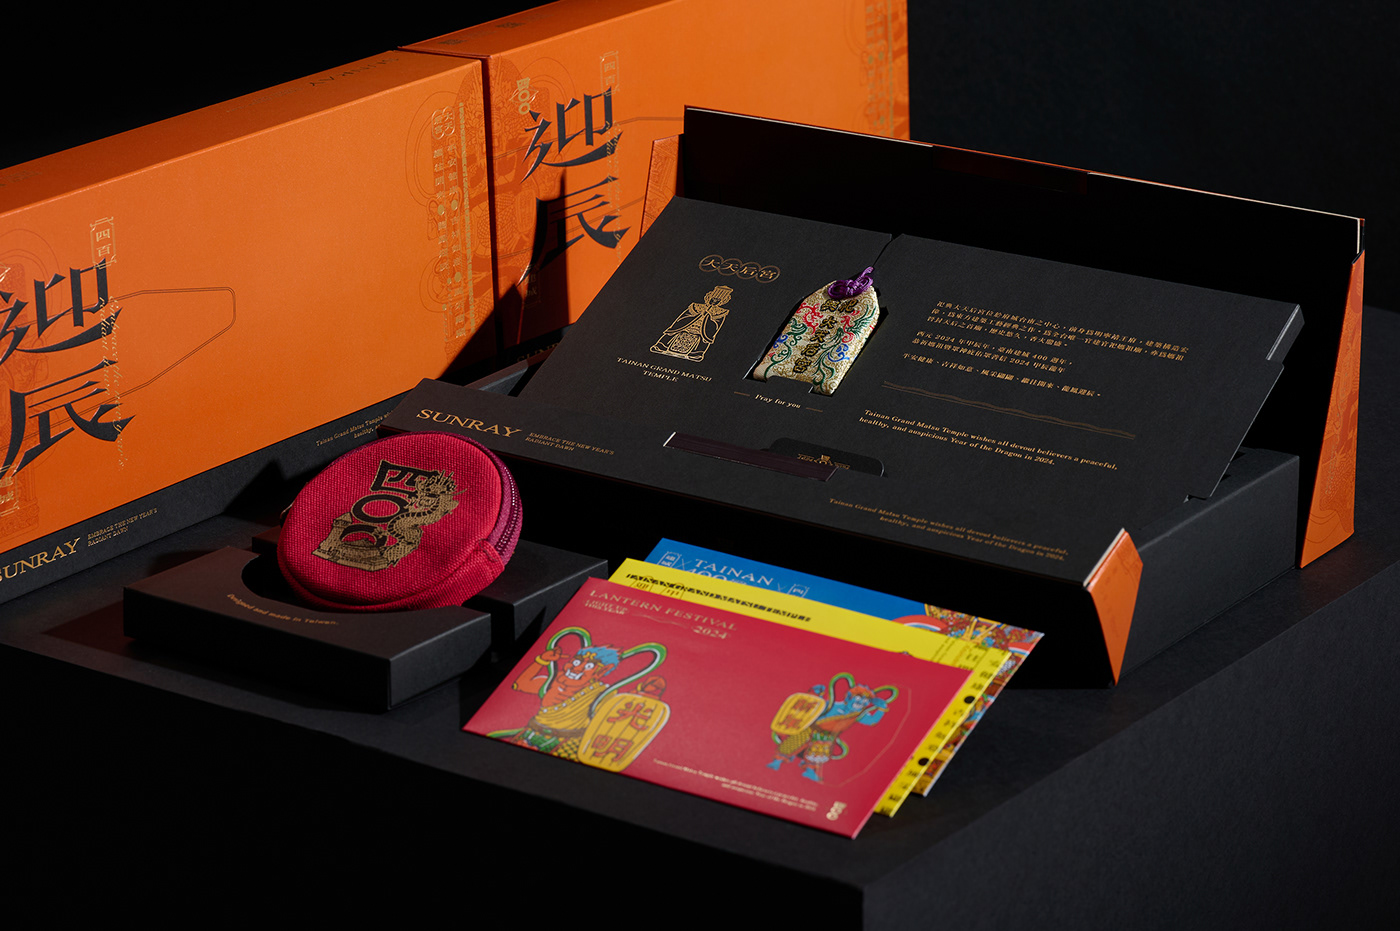 sunray 4W STUDIO Siwei Design artwork packaging design croter new year gift box custom project SHINKON CINEMAS